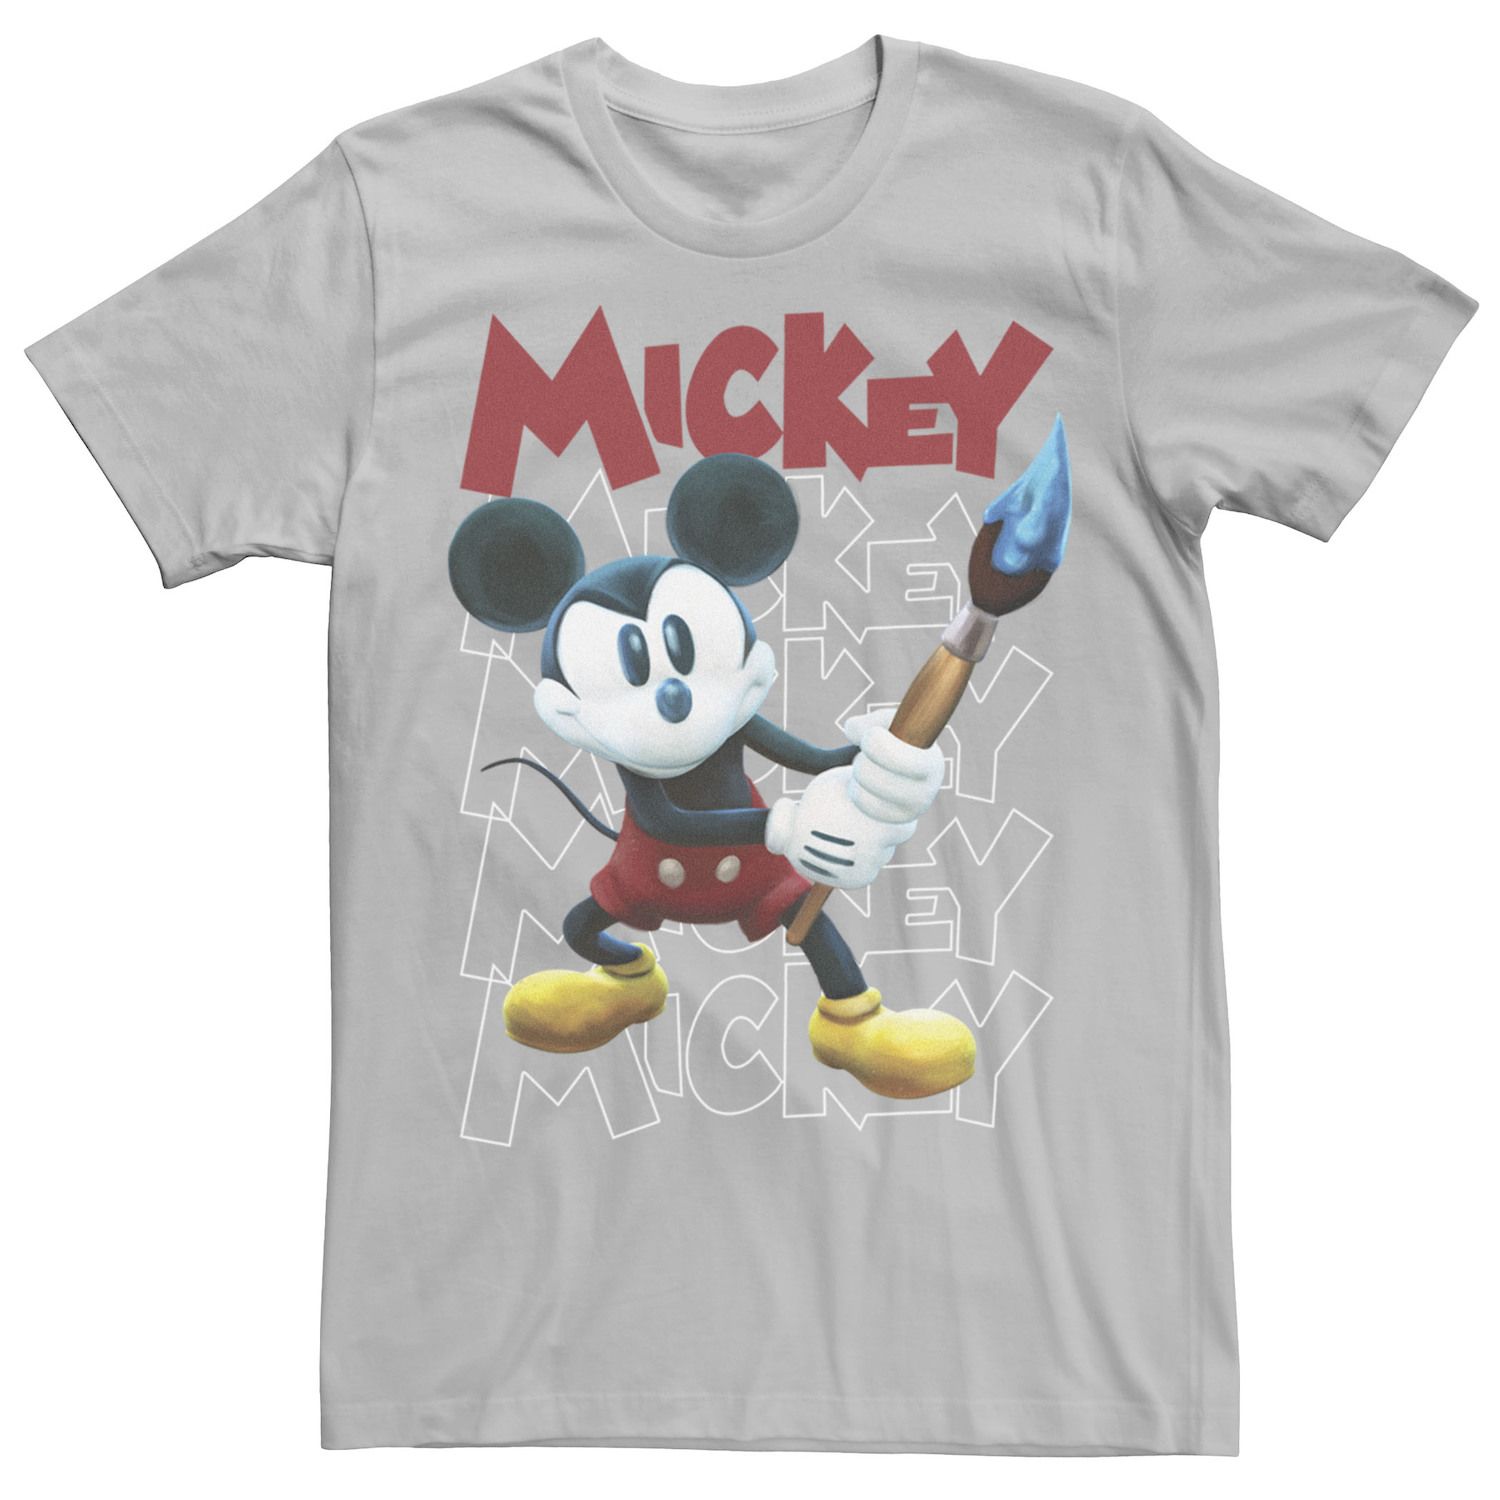 Мужская футболка Disney Epic Mickey Portrait Word Stack Licensed Character мужская футболка с портретом disney epic mickey painting licensed character